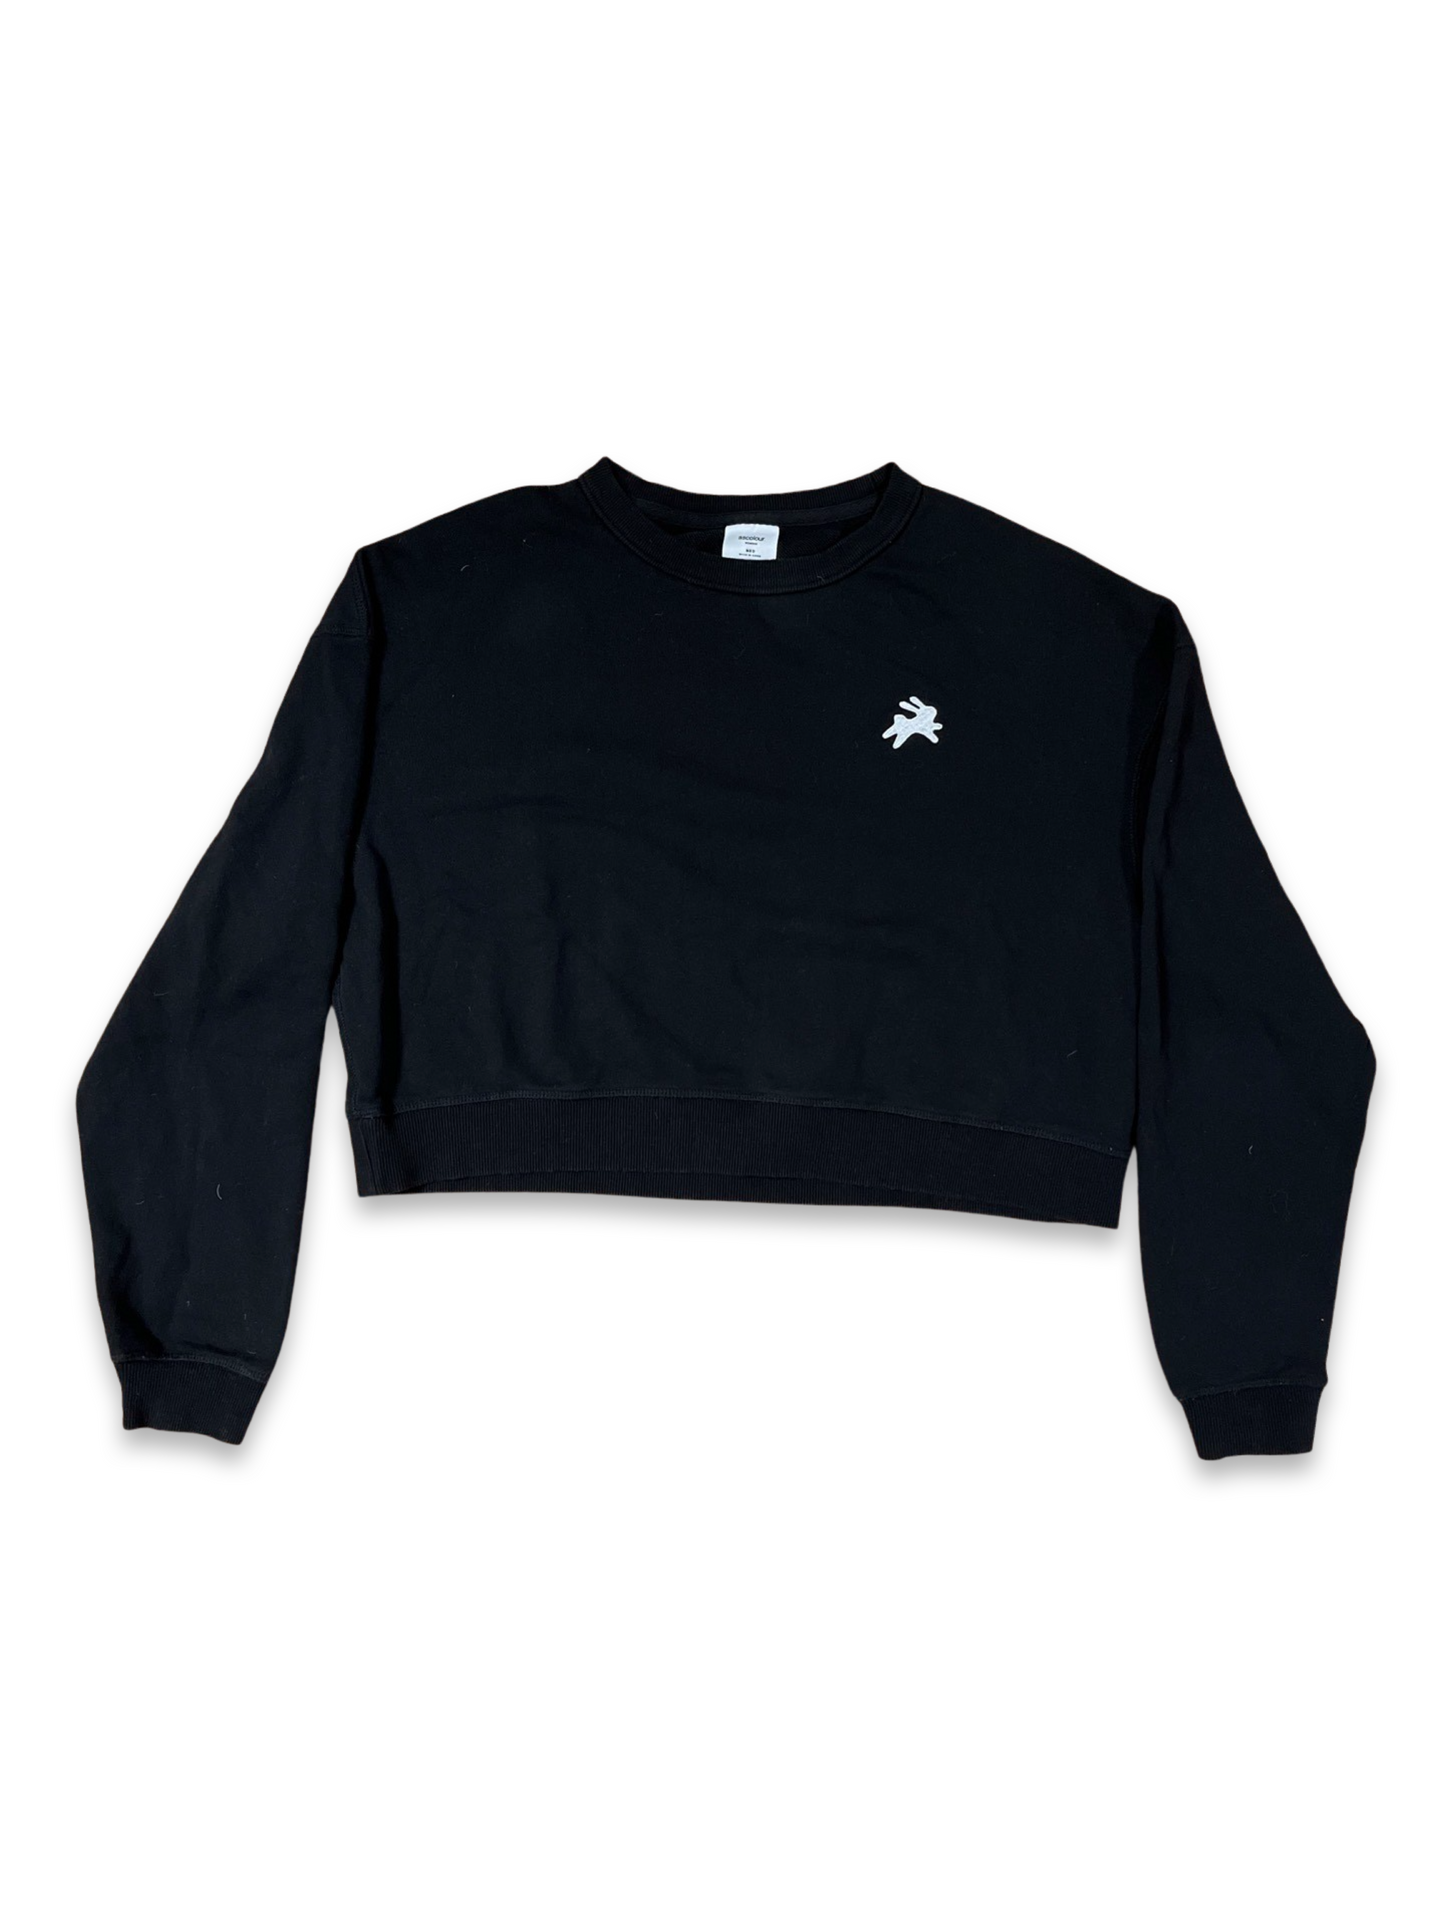 Cropped Patch Sweatshirt - Black (M)